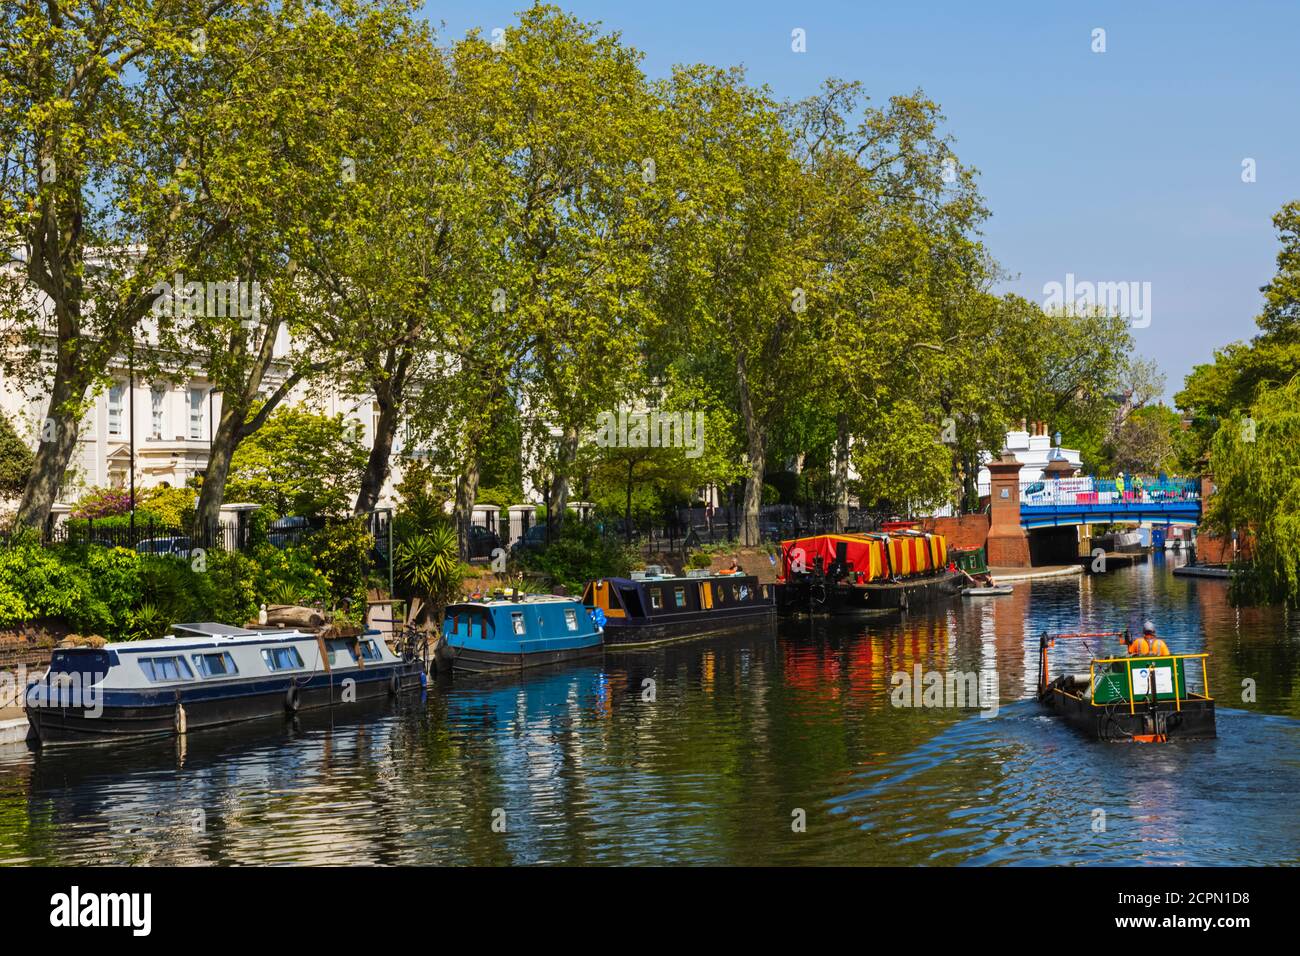 Inghilterra, Londra, Città di Westminster, piccola Venezia, Narrow Boats e Canal colorati Foto Stock